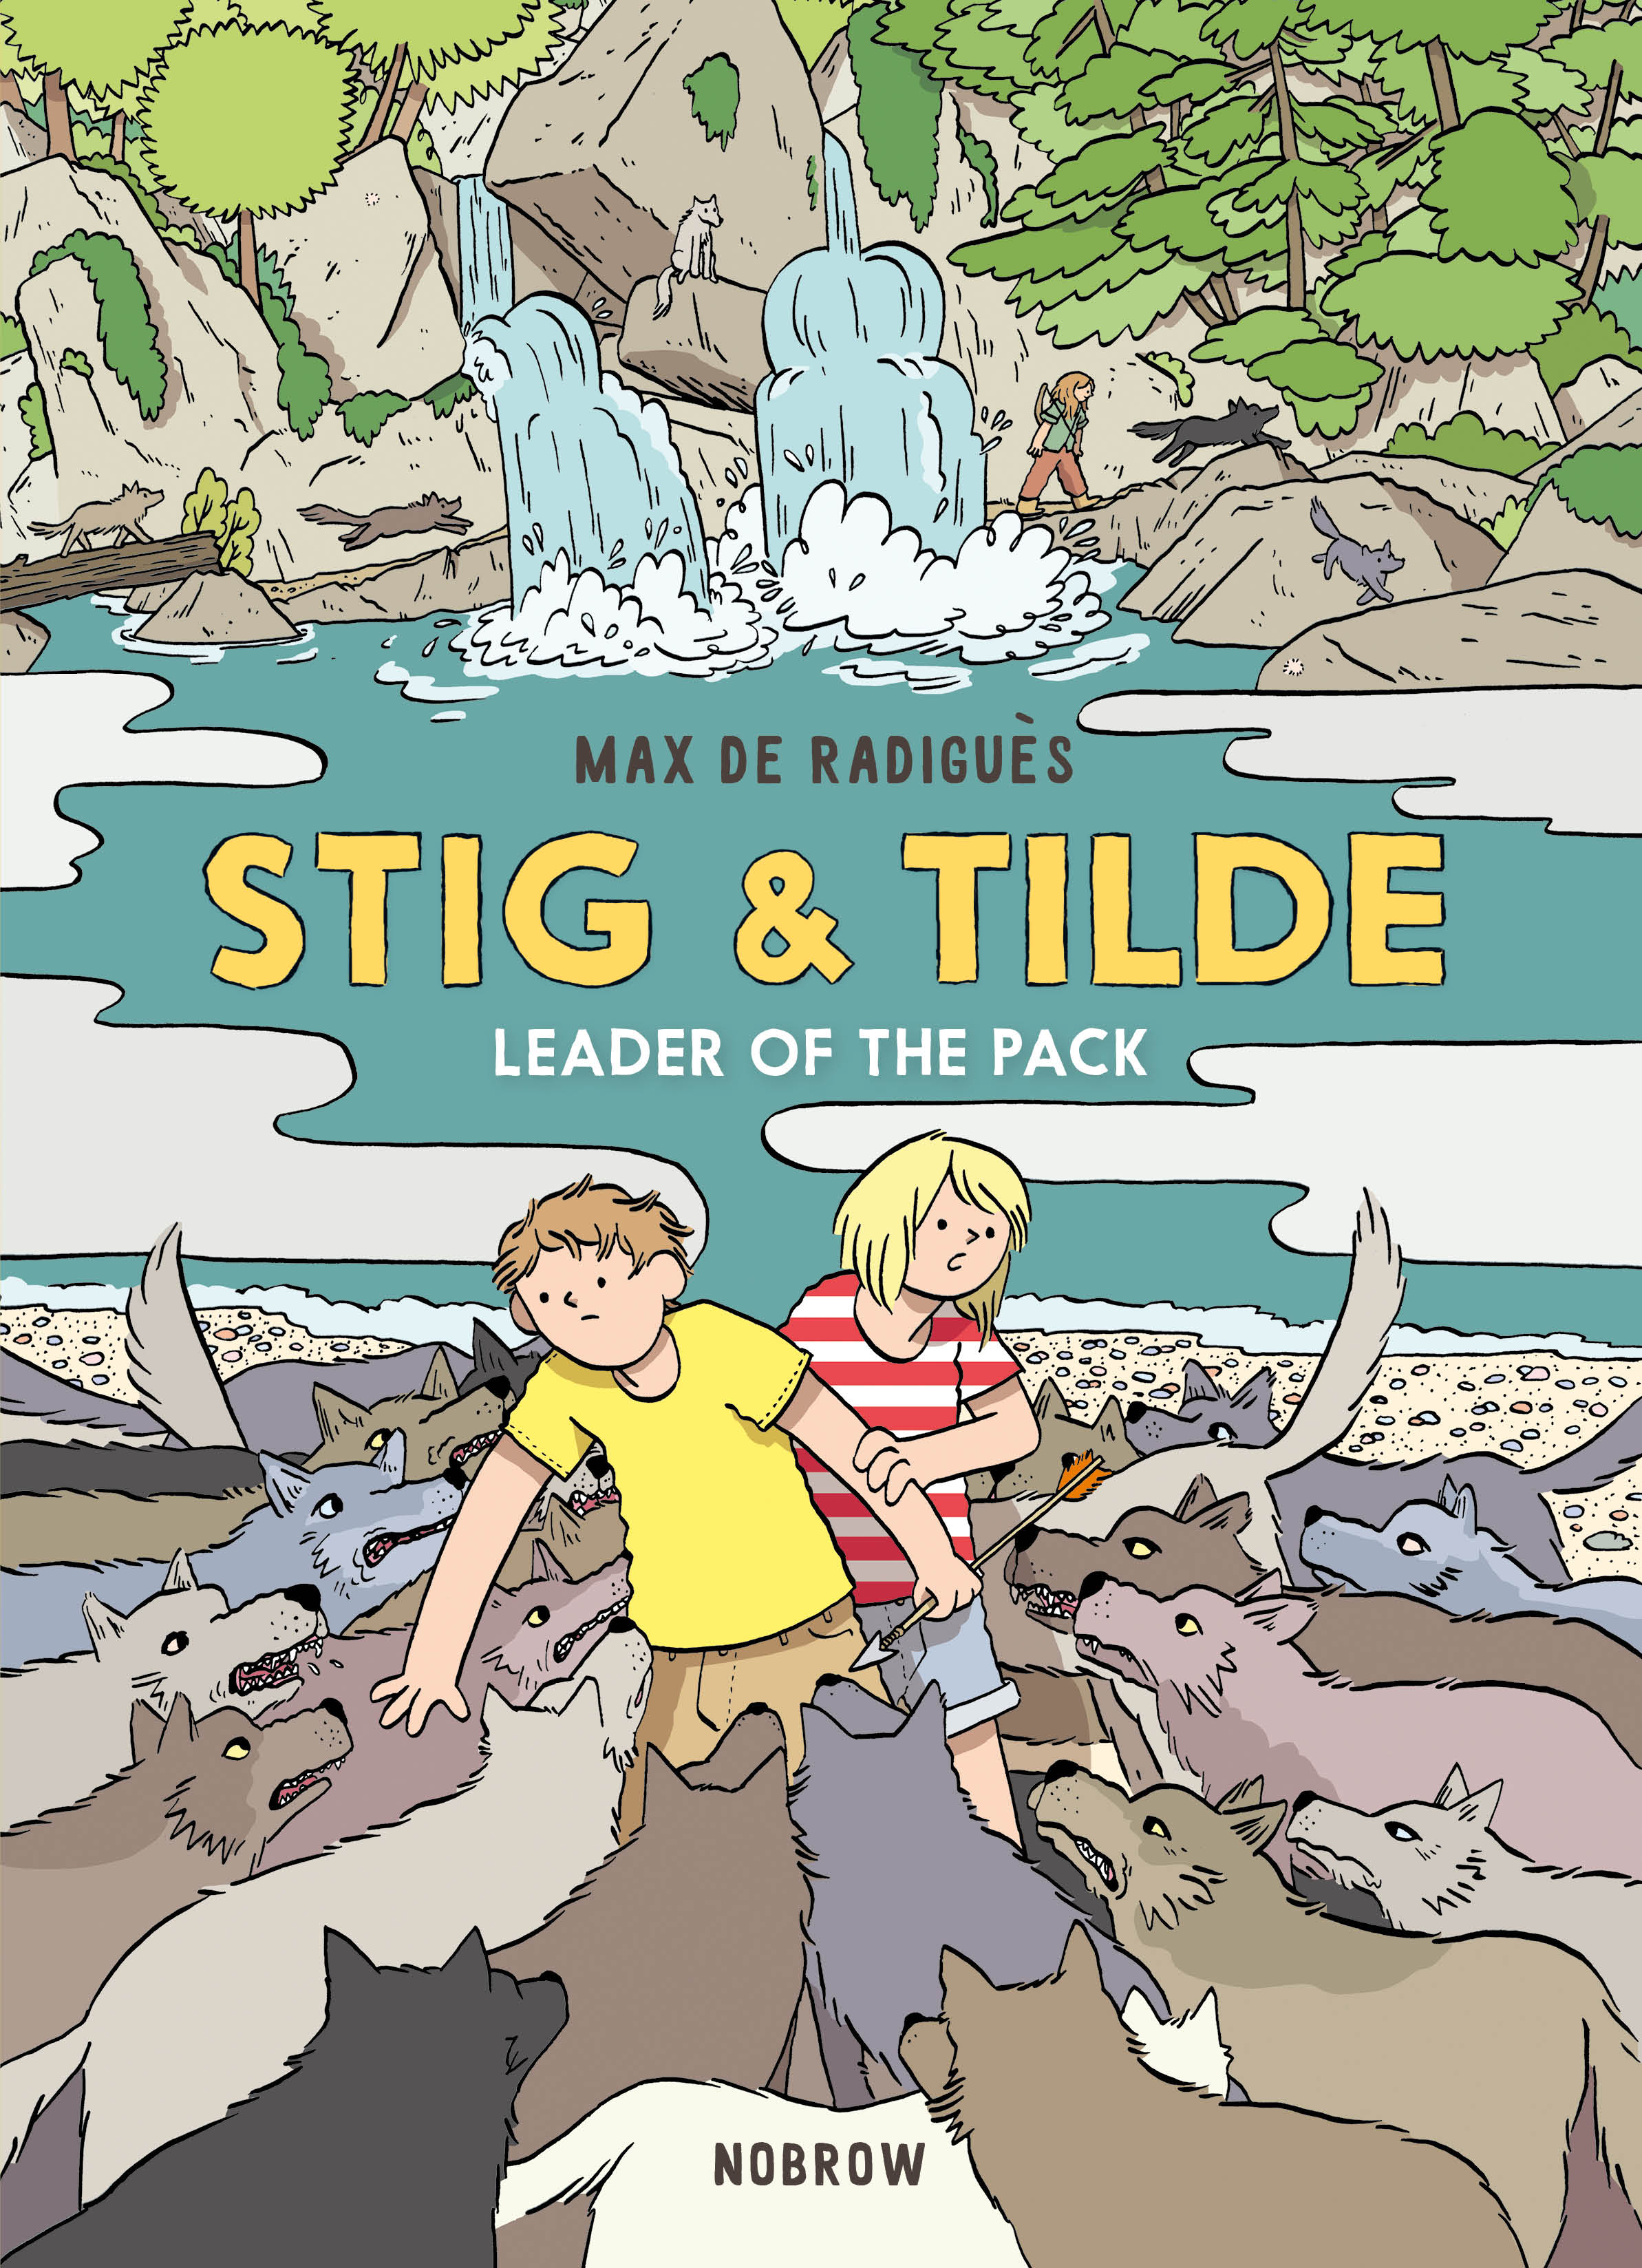 Stig & Tilde 2 (UK - USA) img1